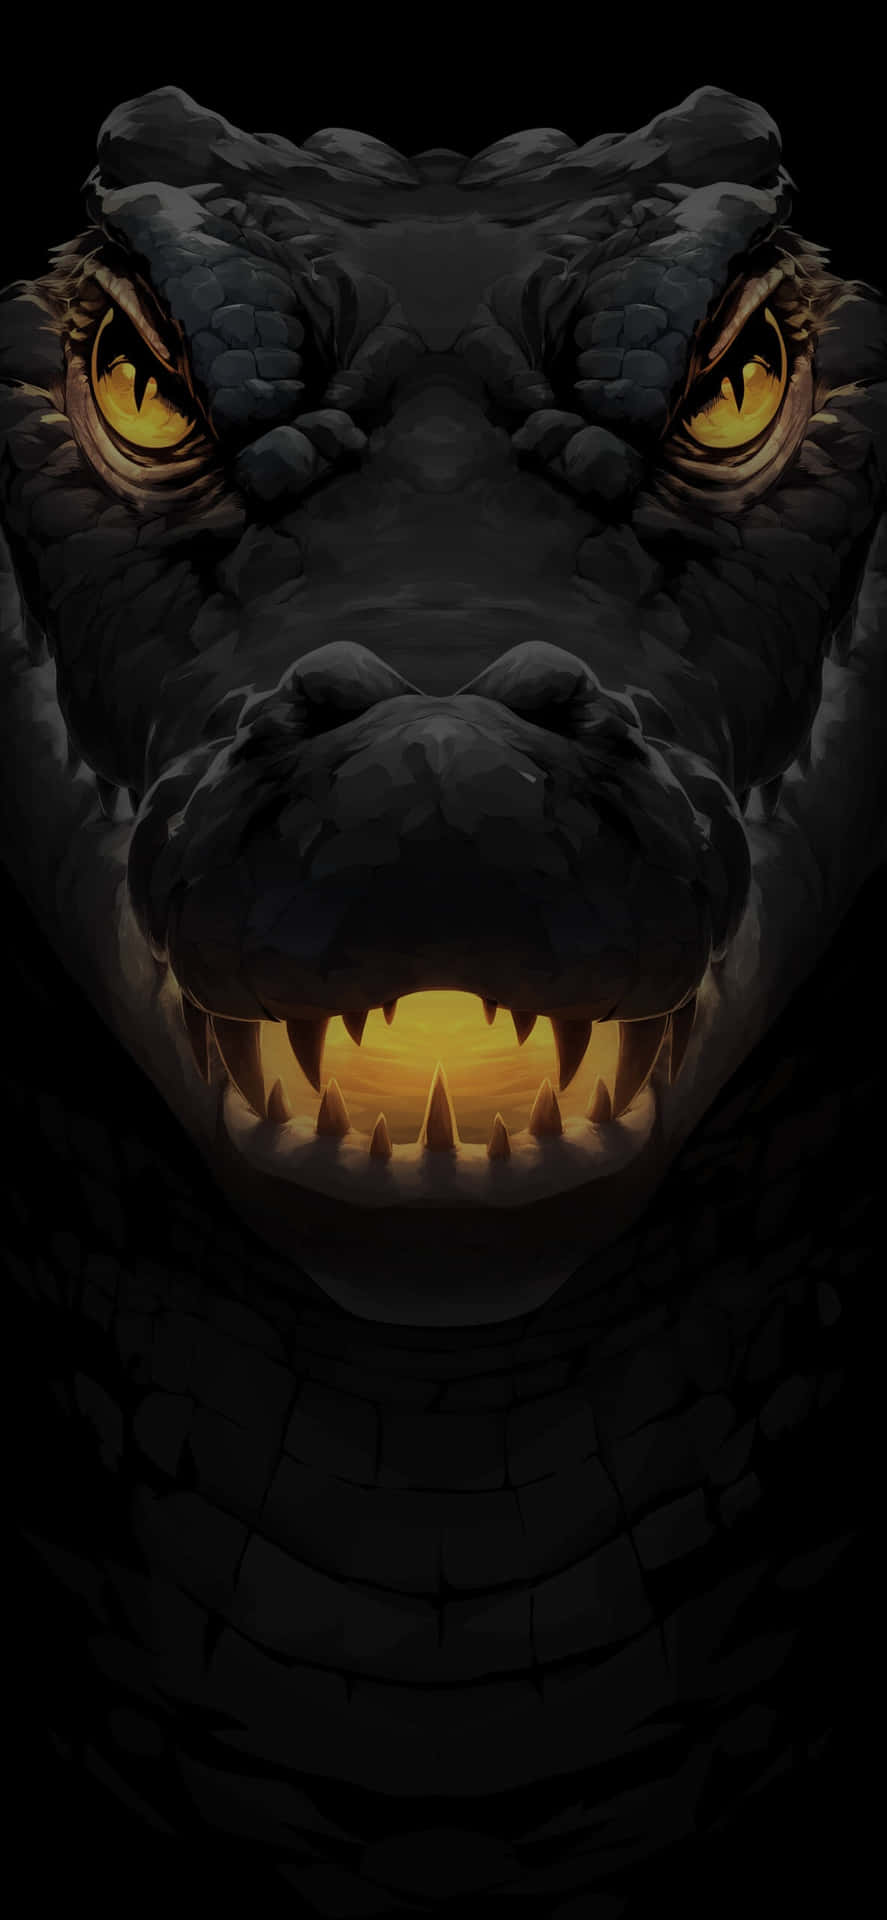 Intimidating Black Crocodile Face Wallpaper